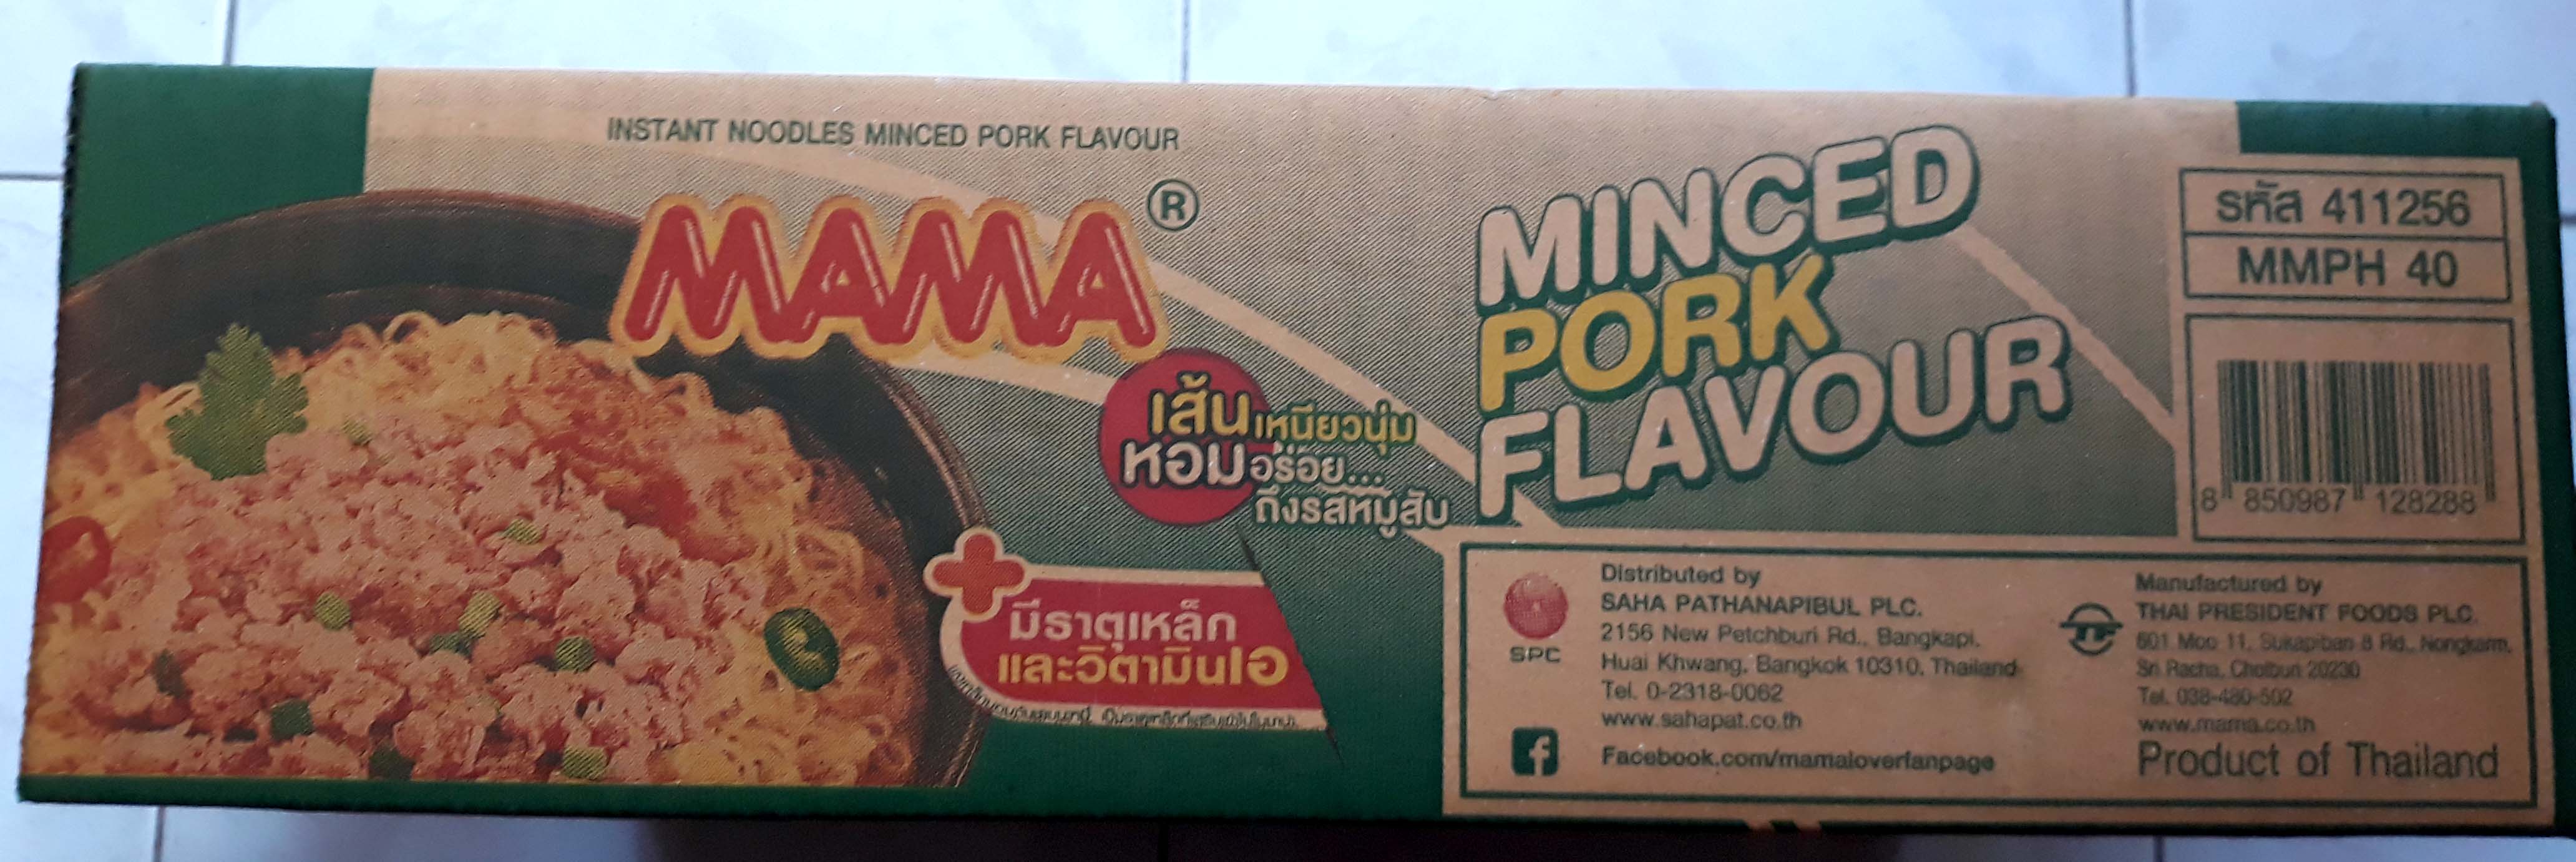 Minced Pork Flavour 1.jpg